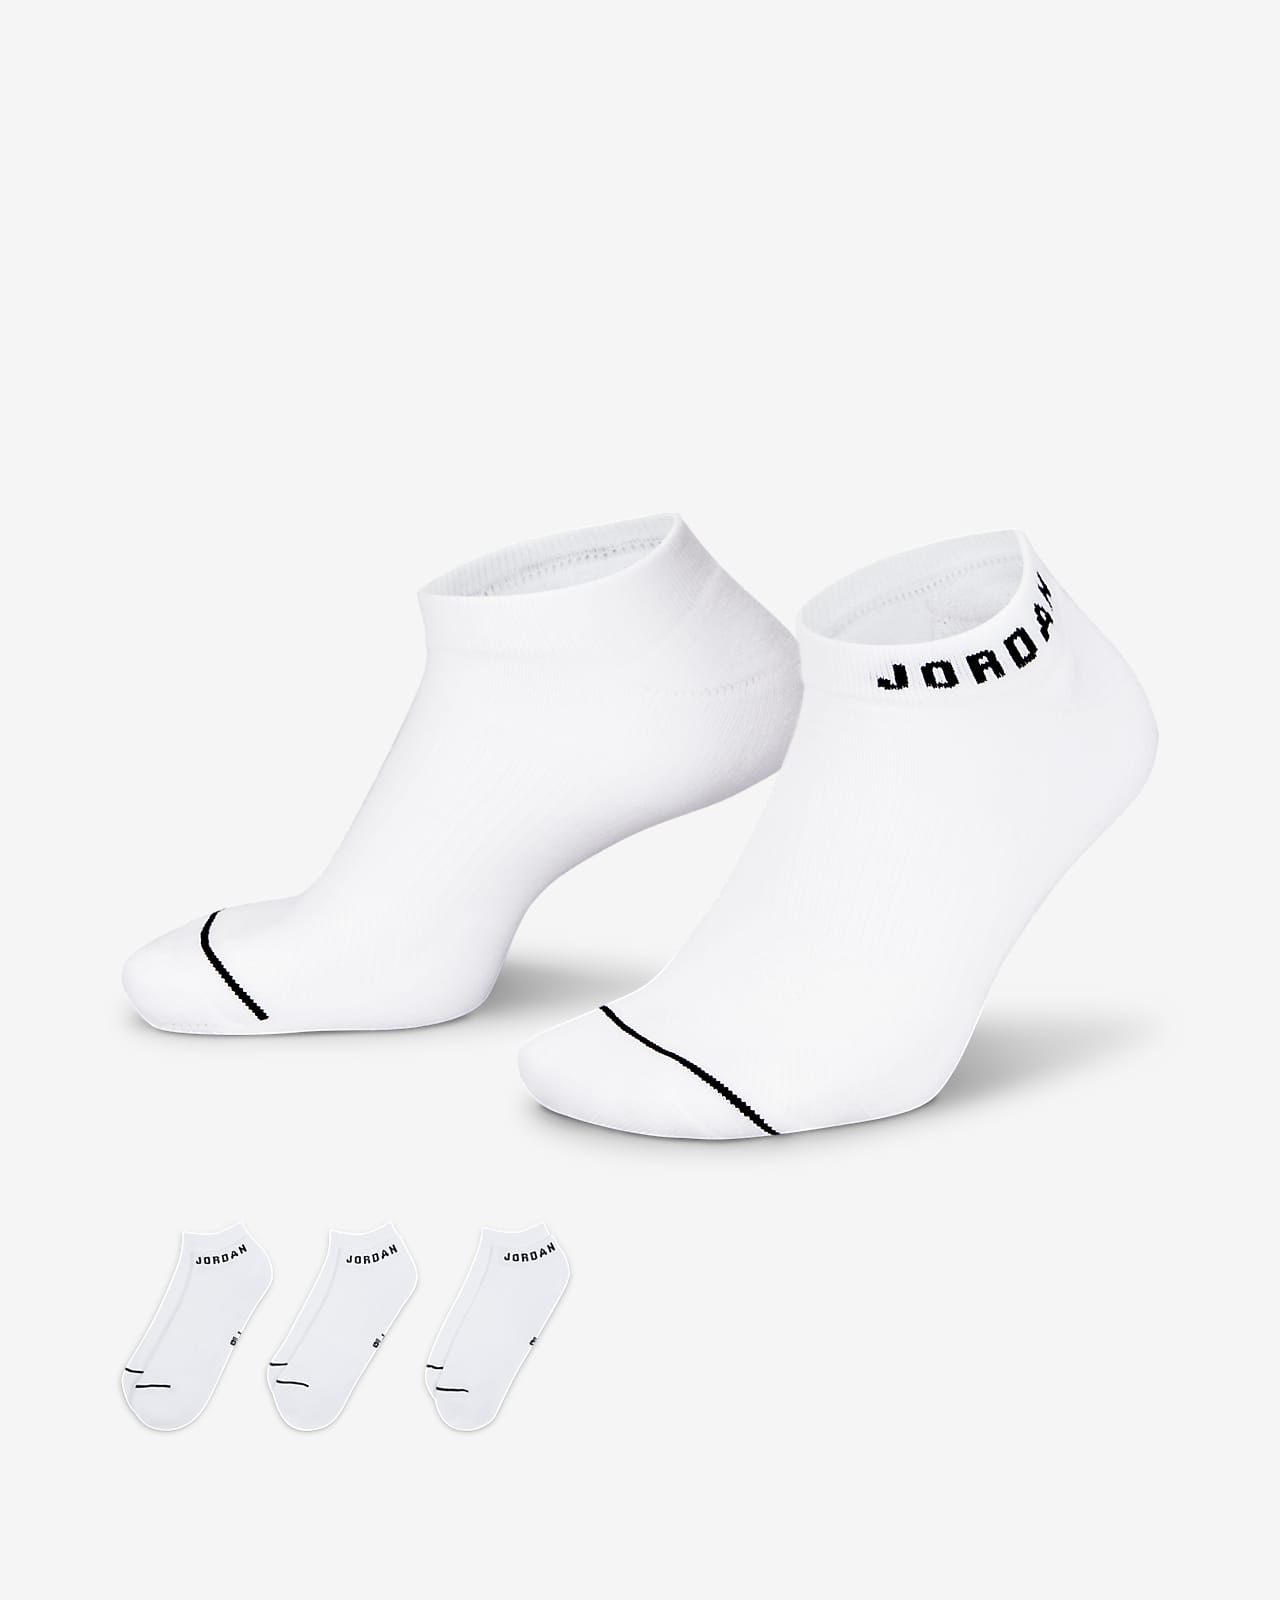 Jordan Everyday No-Show-Socken für jeden Tag (3 Paar)